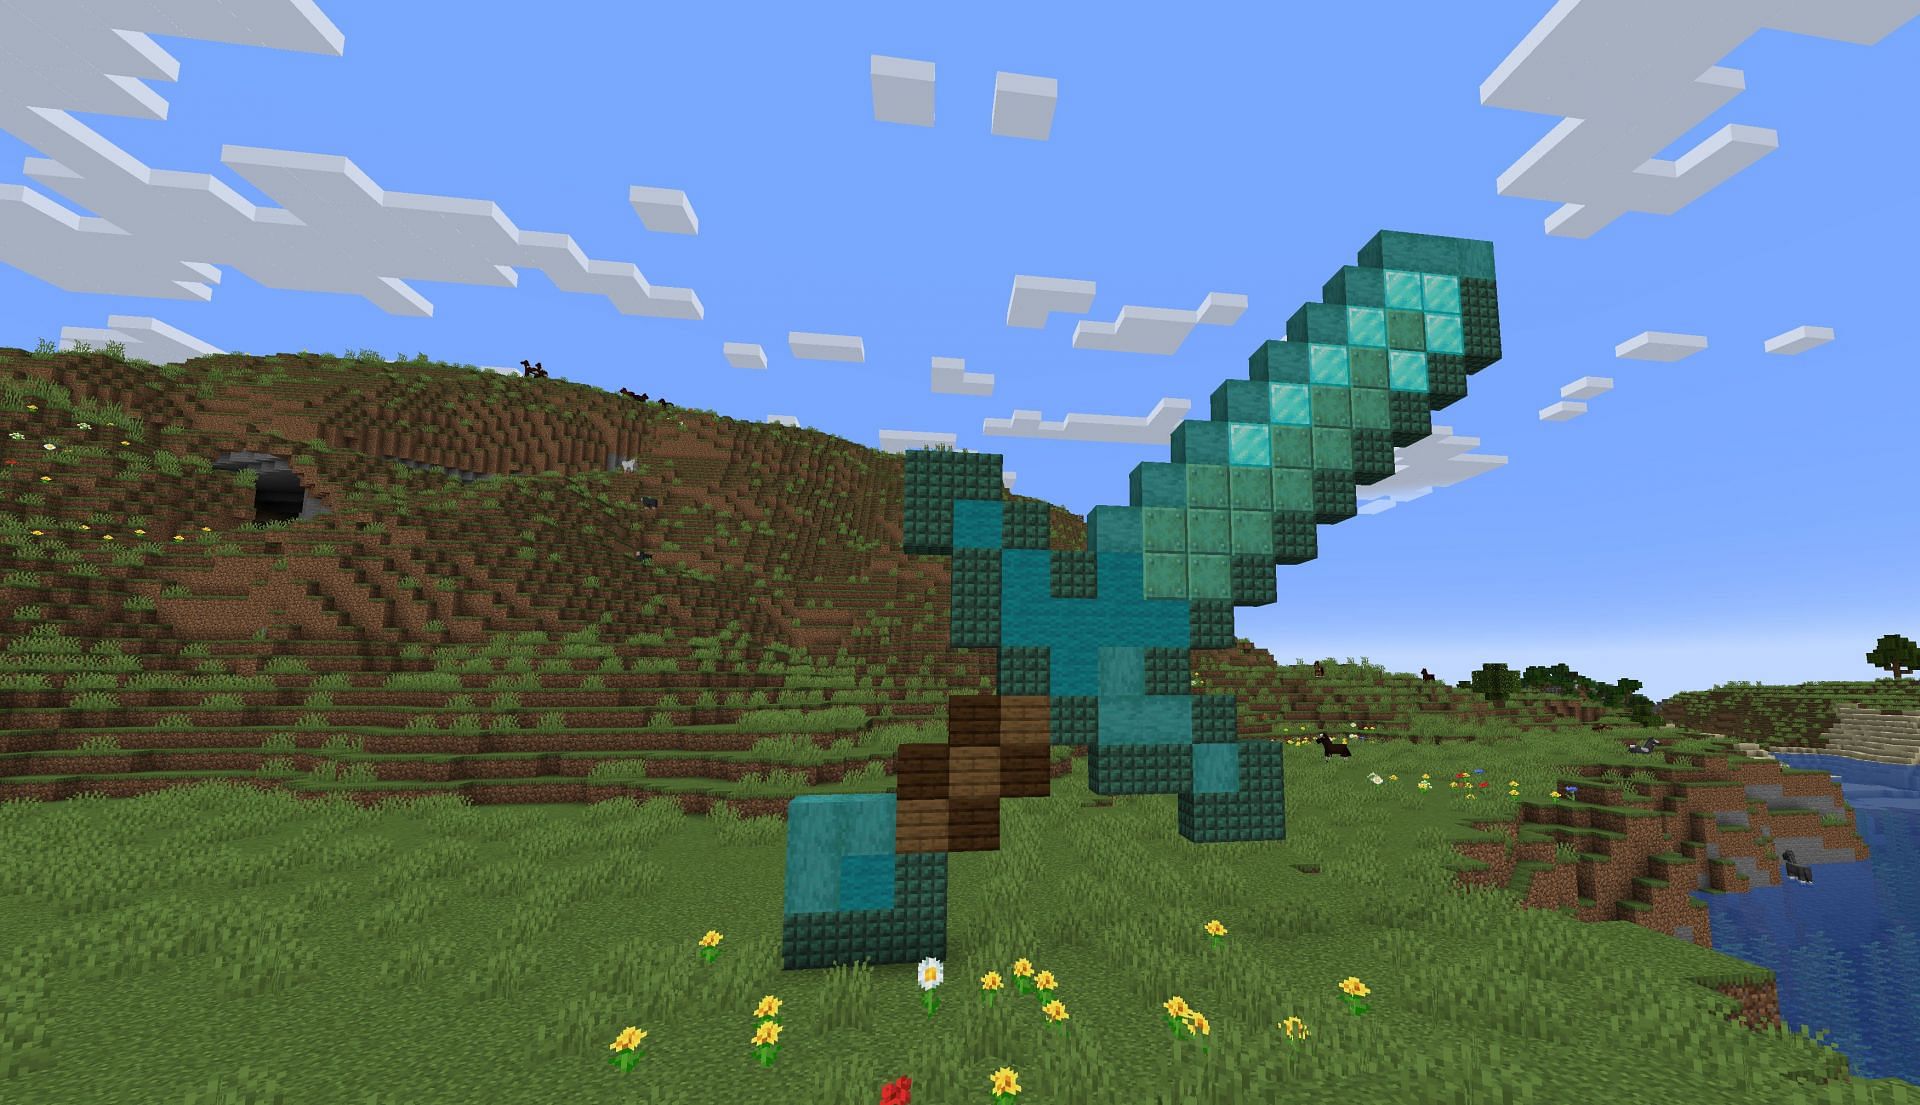 A diamond sword made of Minecraft blocks. (Image via Minecraft)